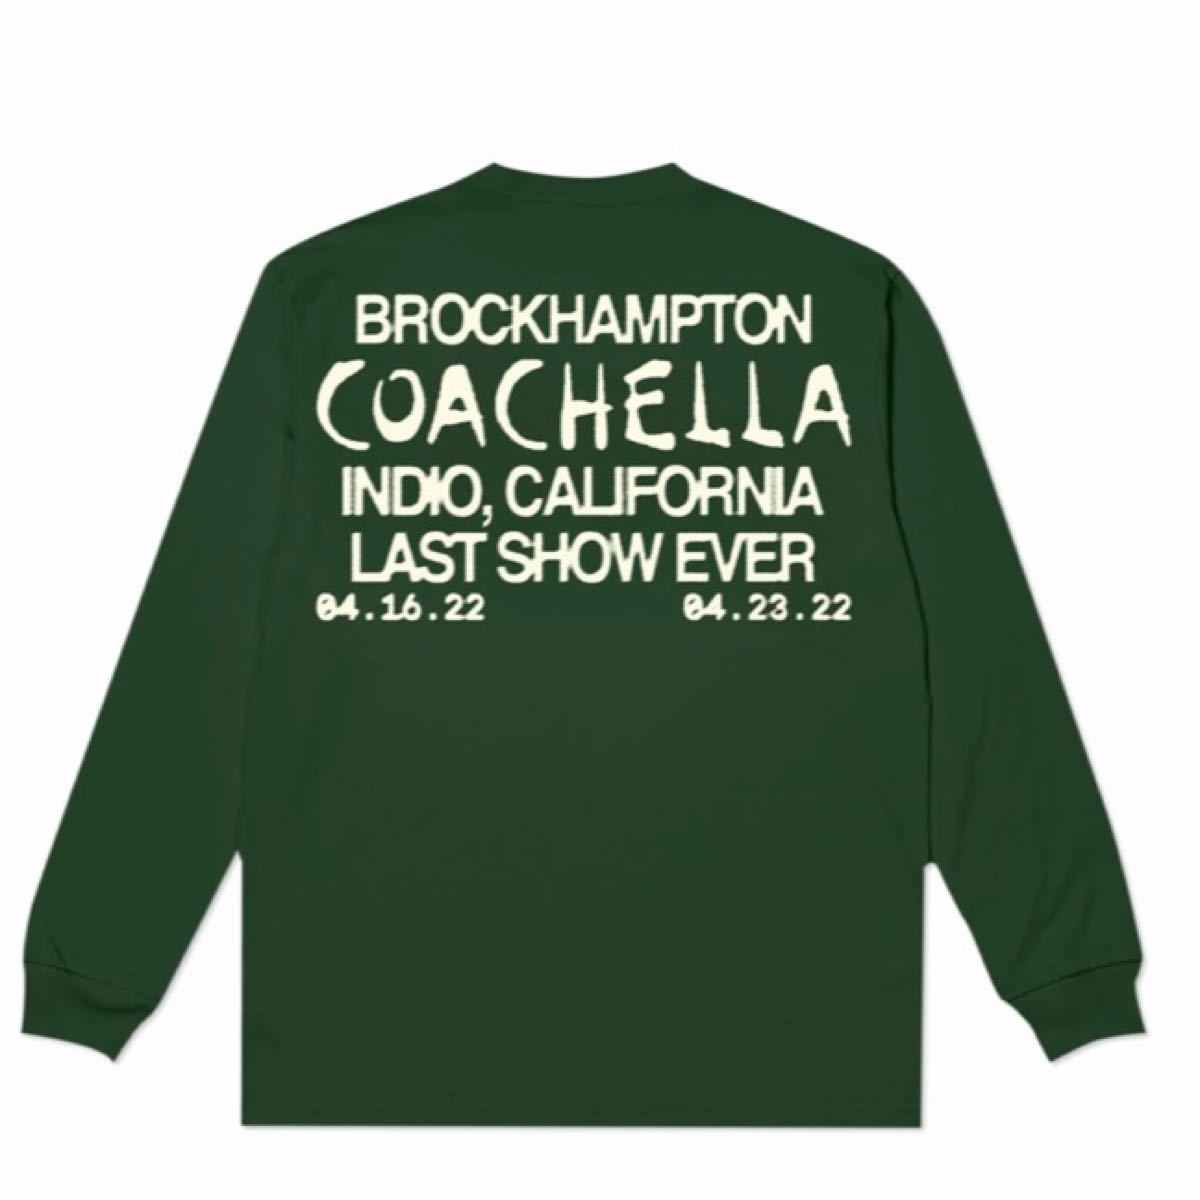 Brockhampton Coachella shirt XL